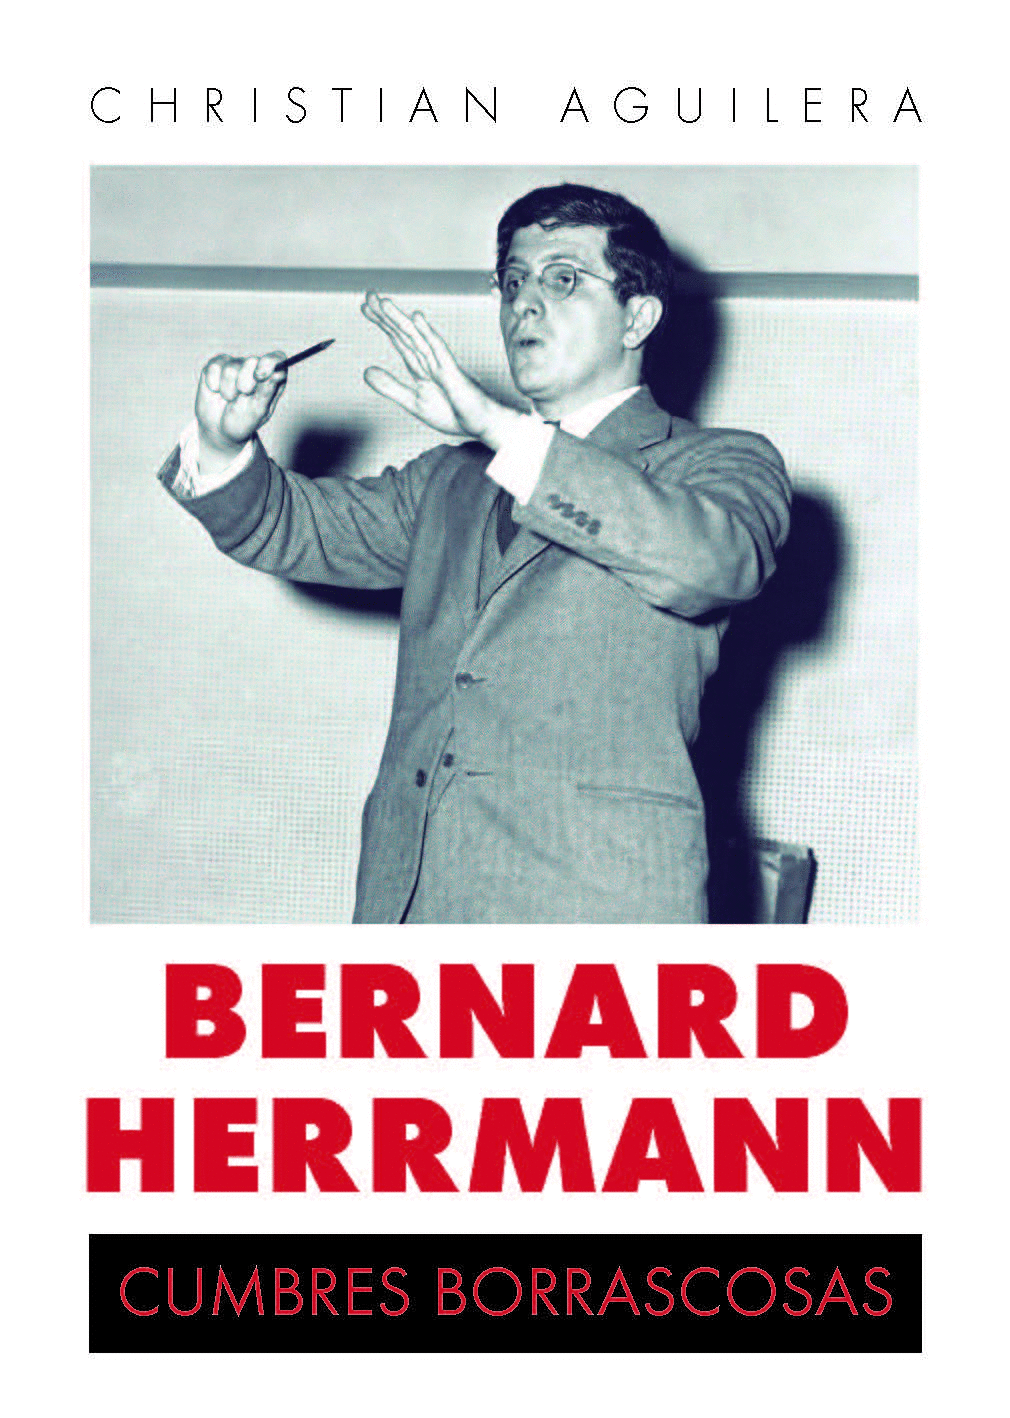 BERNARD HERRMANN: CUMBRES BORRASCOSAS